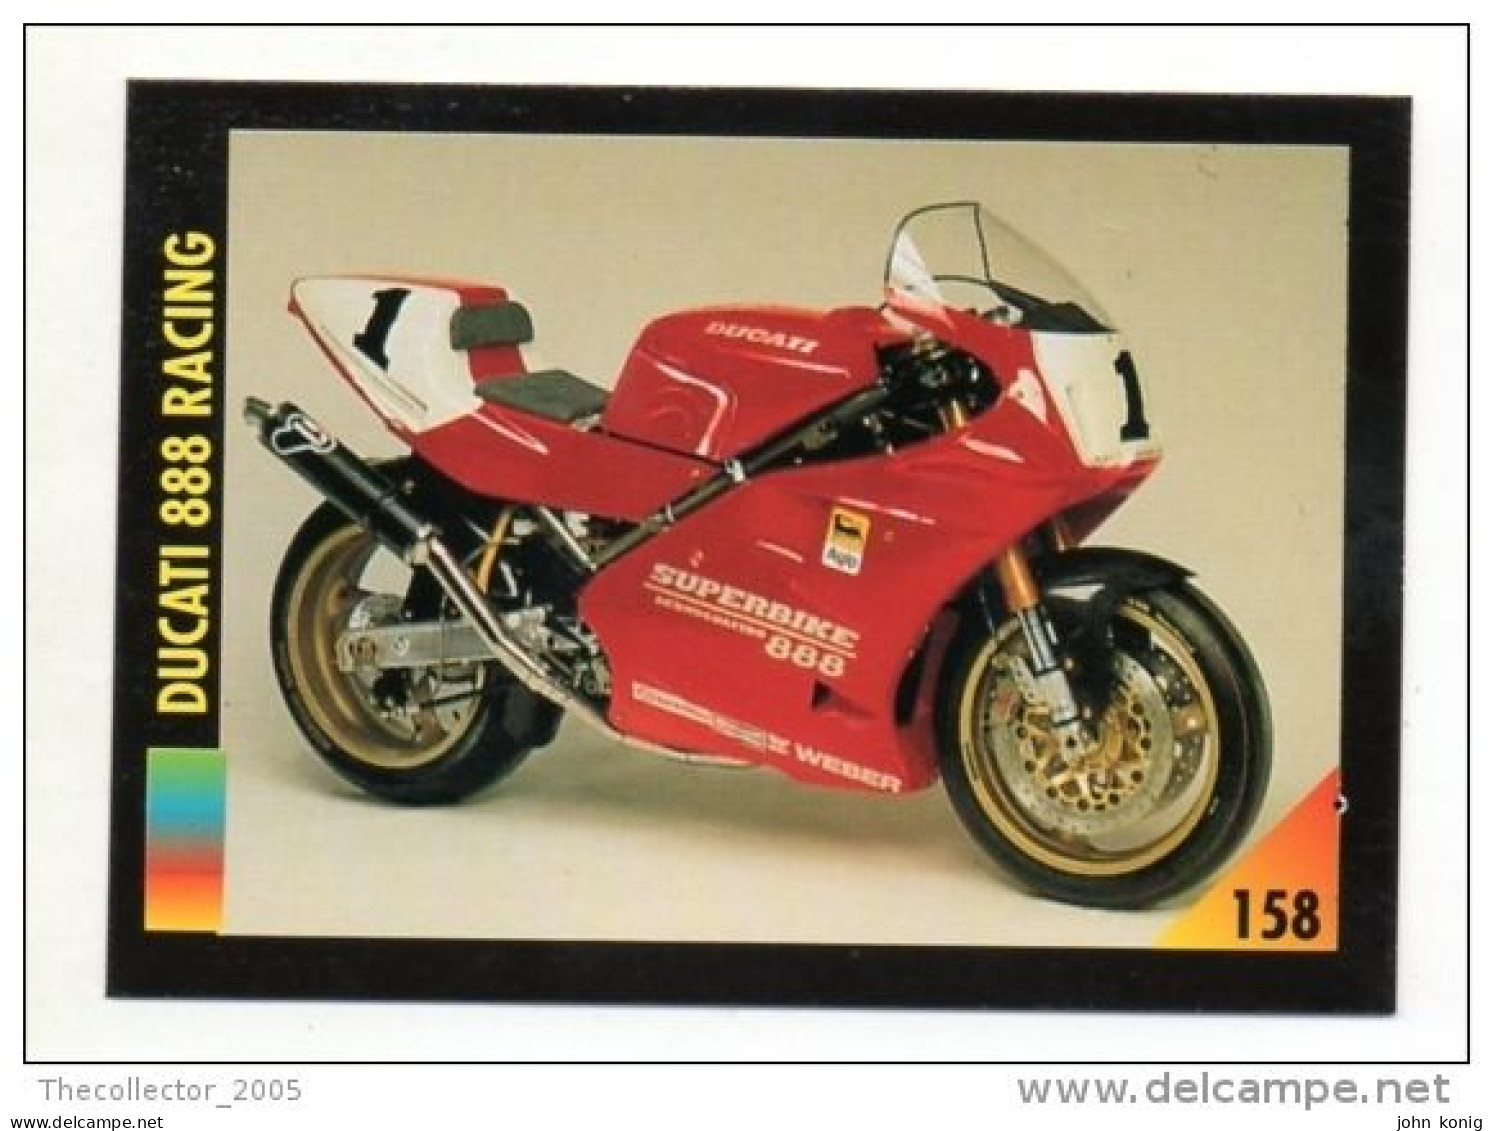 FIGURINA TRADING CARDS - LA MIA MOTO  - MY MOTORBIKE - MASTERS EDIZIONI (1993) - DUCATI 888 RACING - Engine